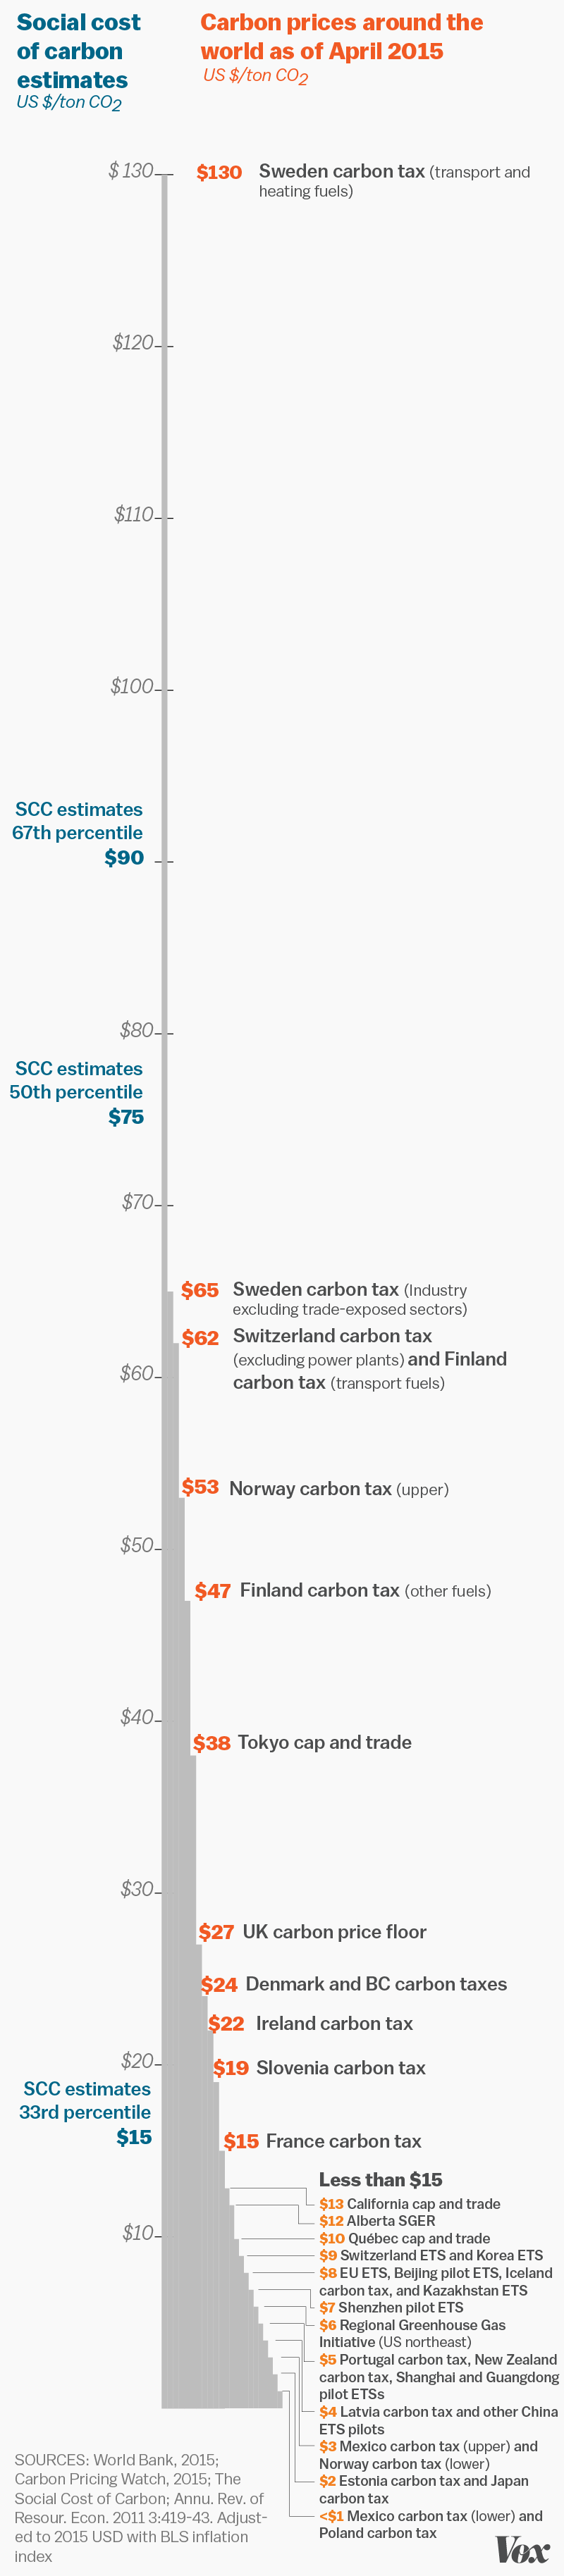 carbon taxes around the world